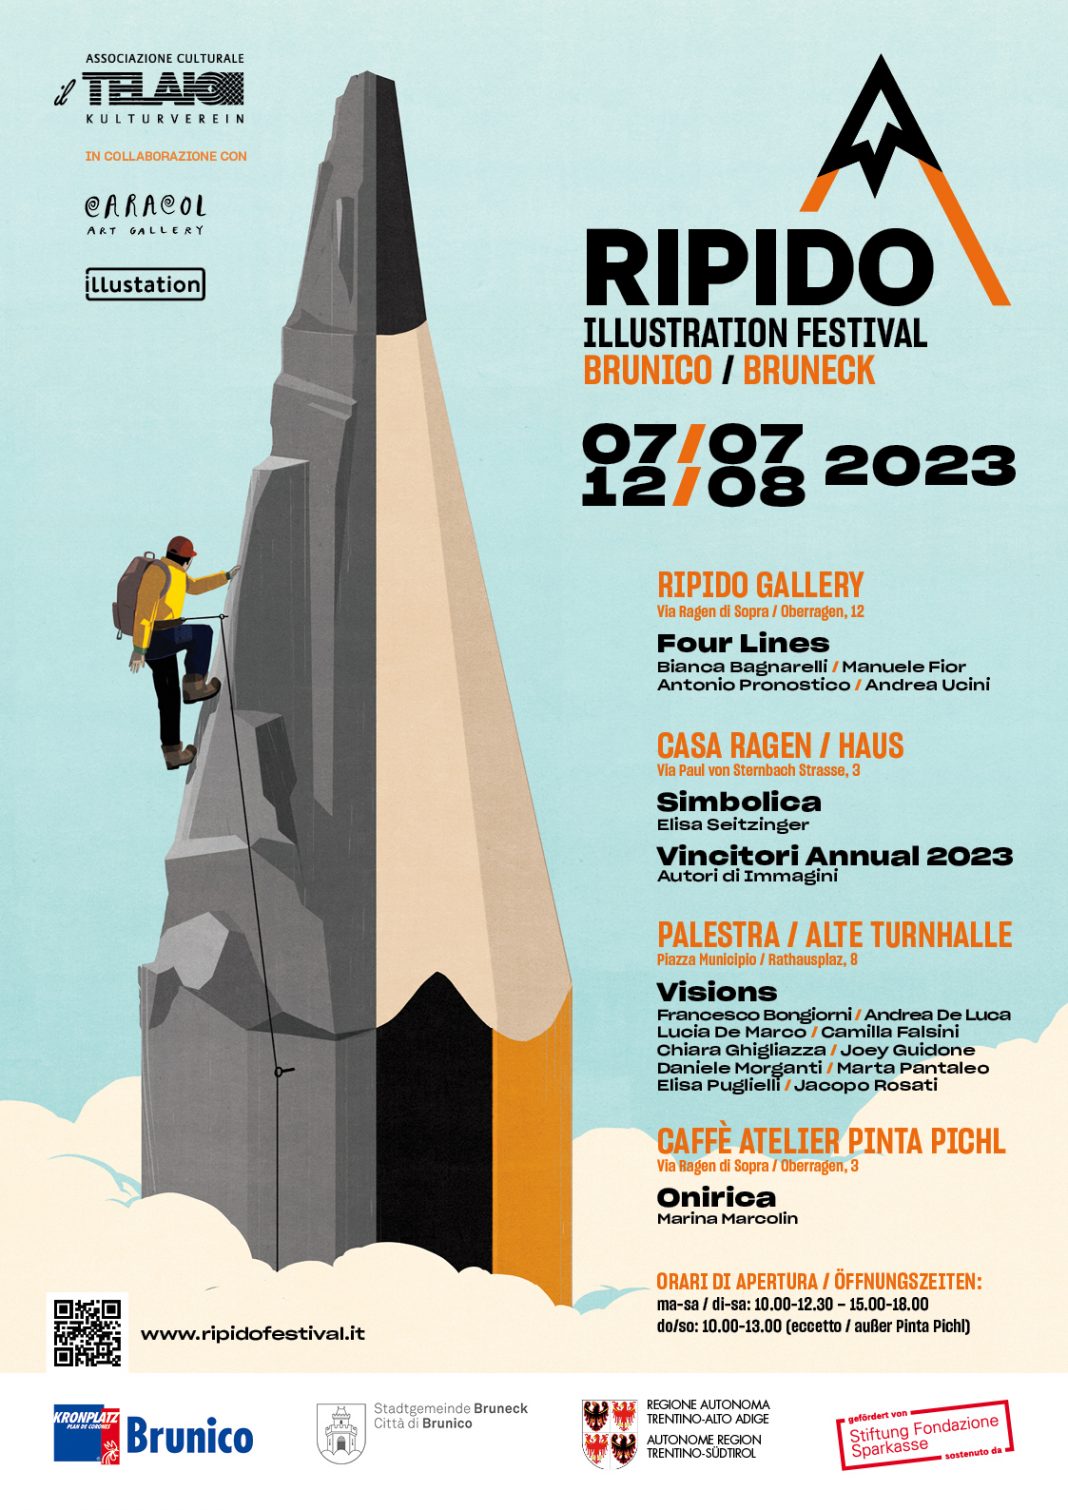 RIPIDO Illustration Festivalhttps://www.exibart.com/repository/media/formidable/11/img/5d7/RIPIDO_LOCANDINA_2023-1068x1510.jpg